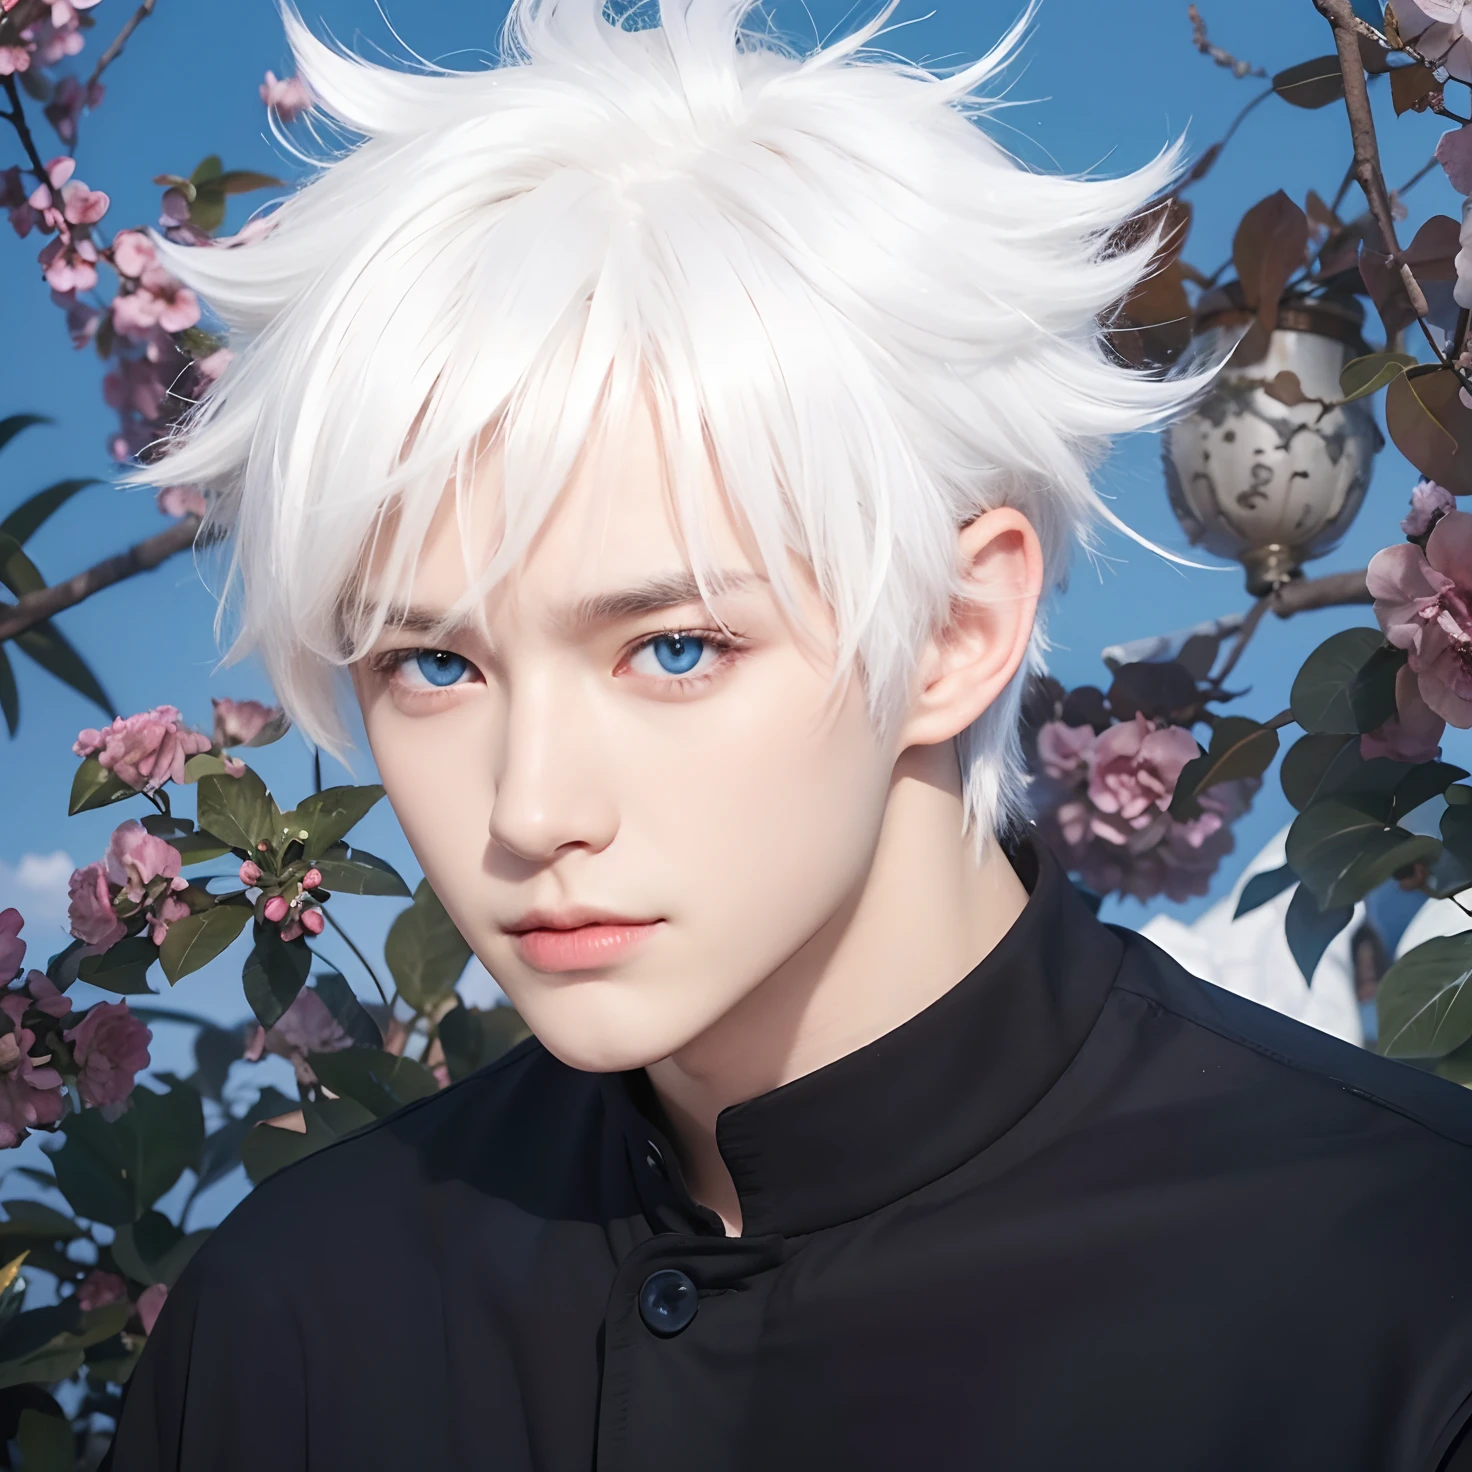 Um menino com cabelos brancos realistas, olhos azuis brilhantes realistas, rosto bonito coreano realista, expressão legal realista, adapta exatamente as mesmas roupas,Adapte o fundo exatamente, luz realista, sombras realistas